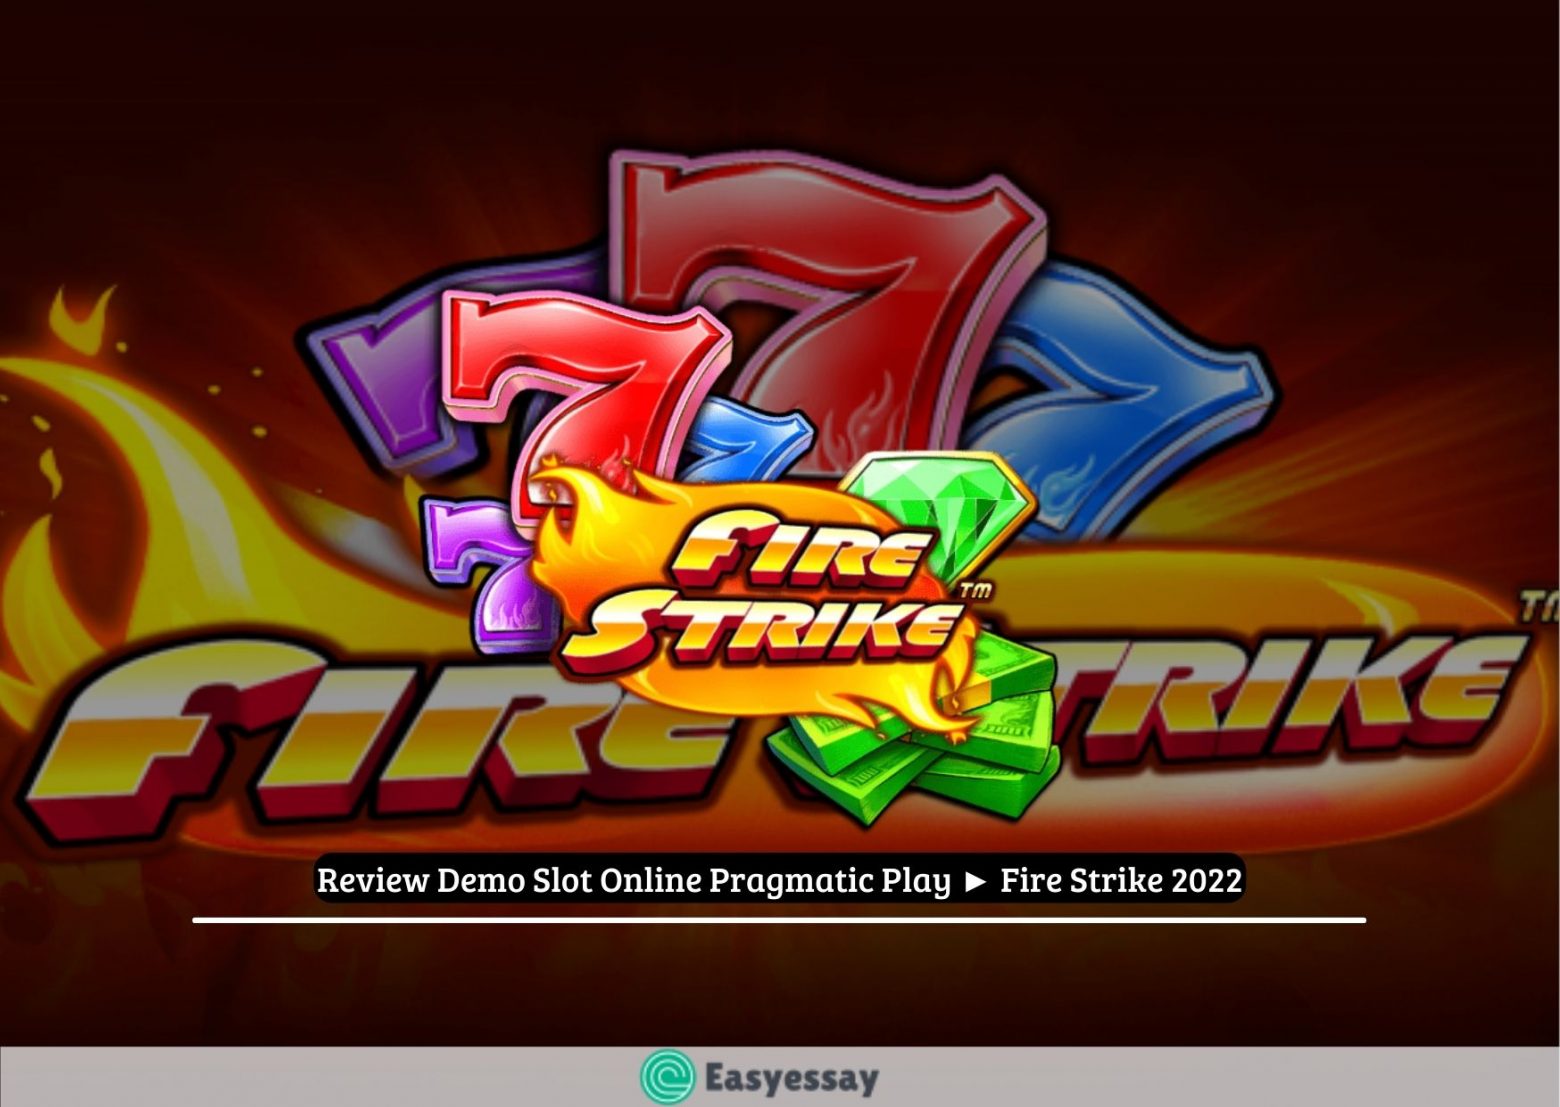 Review Demo Slot Online Pragmatic Play ► Fire Strike 2022